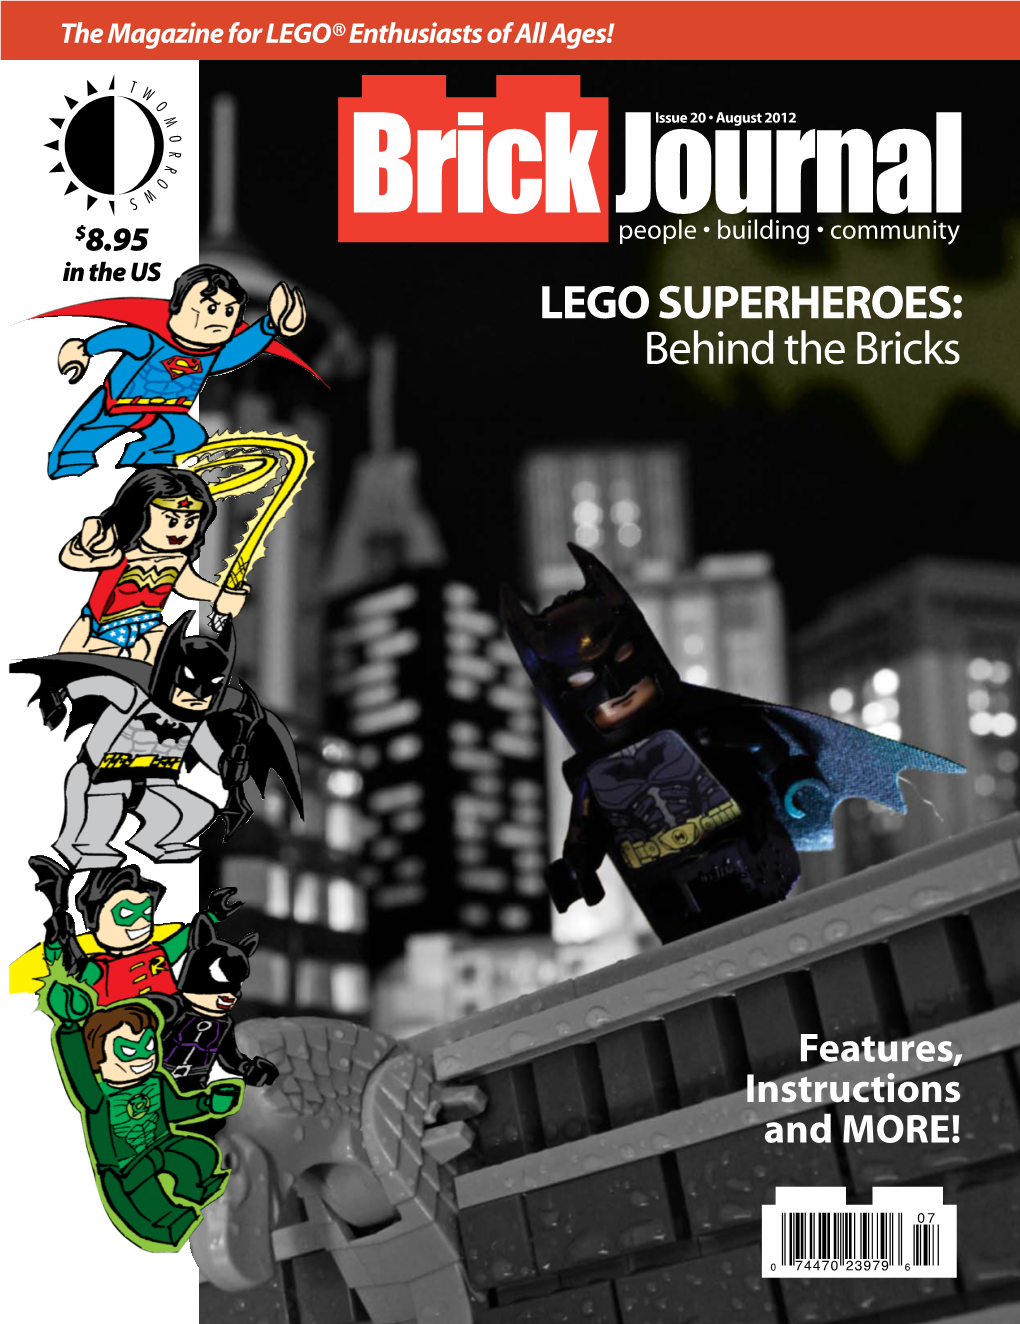 LEGO SUPERHEROES: Behind the Bricks